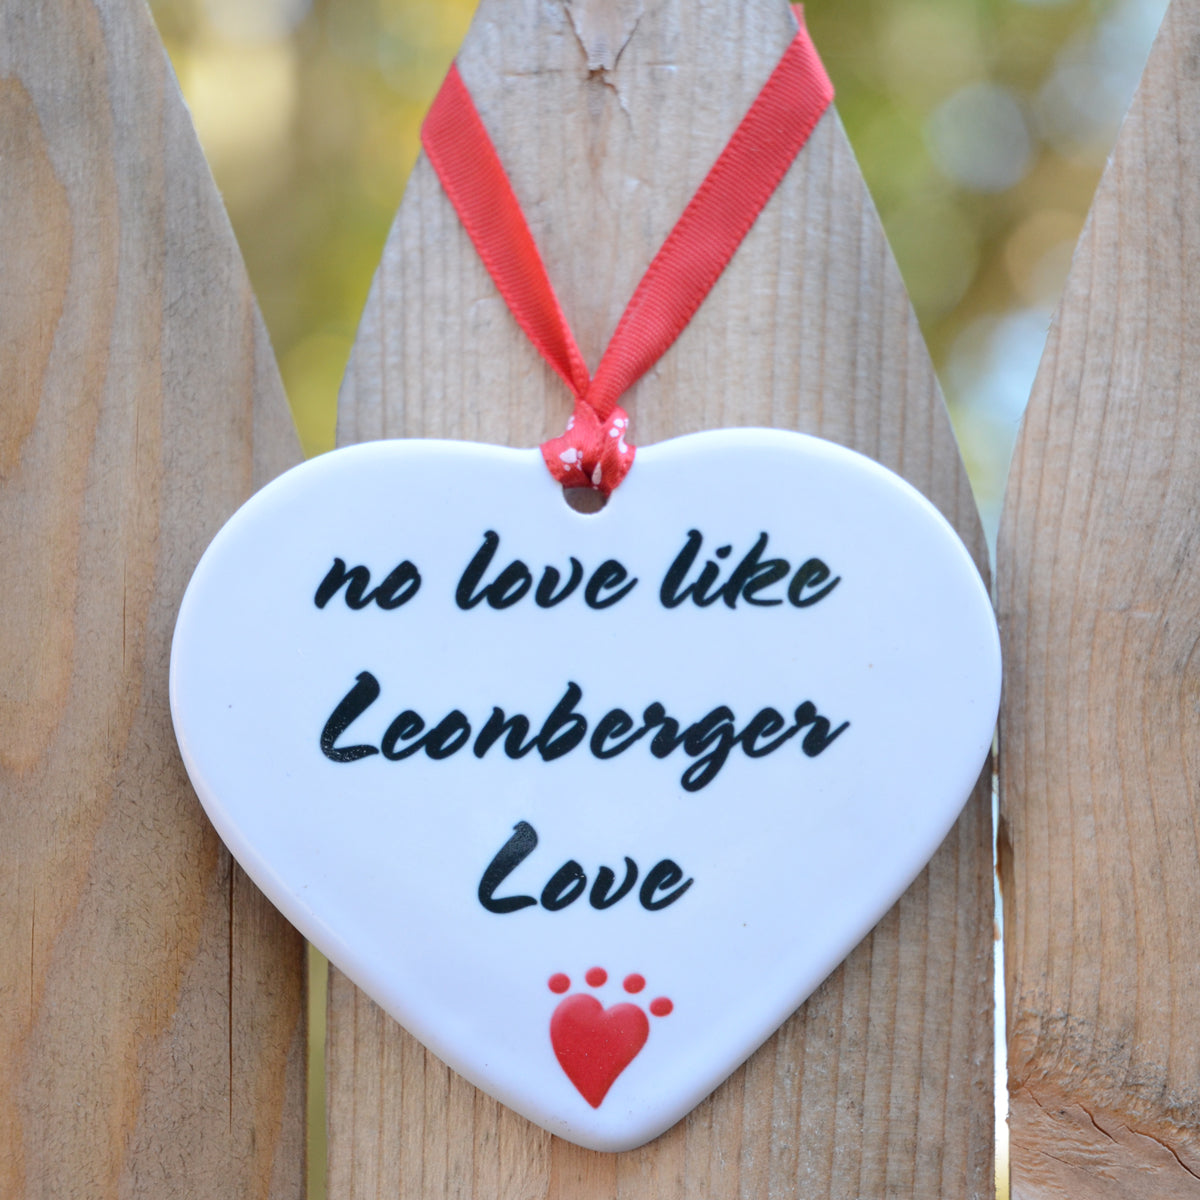 "Leonberger Porcelain Heart Ornament"